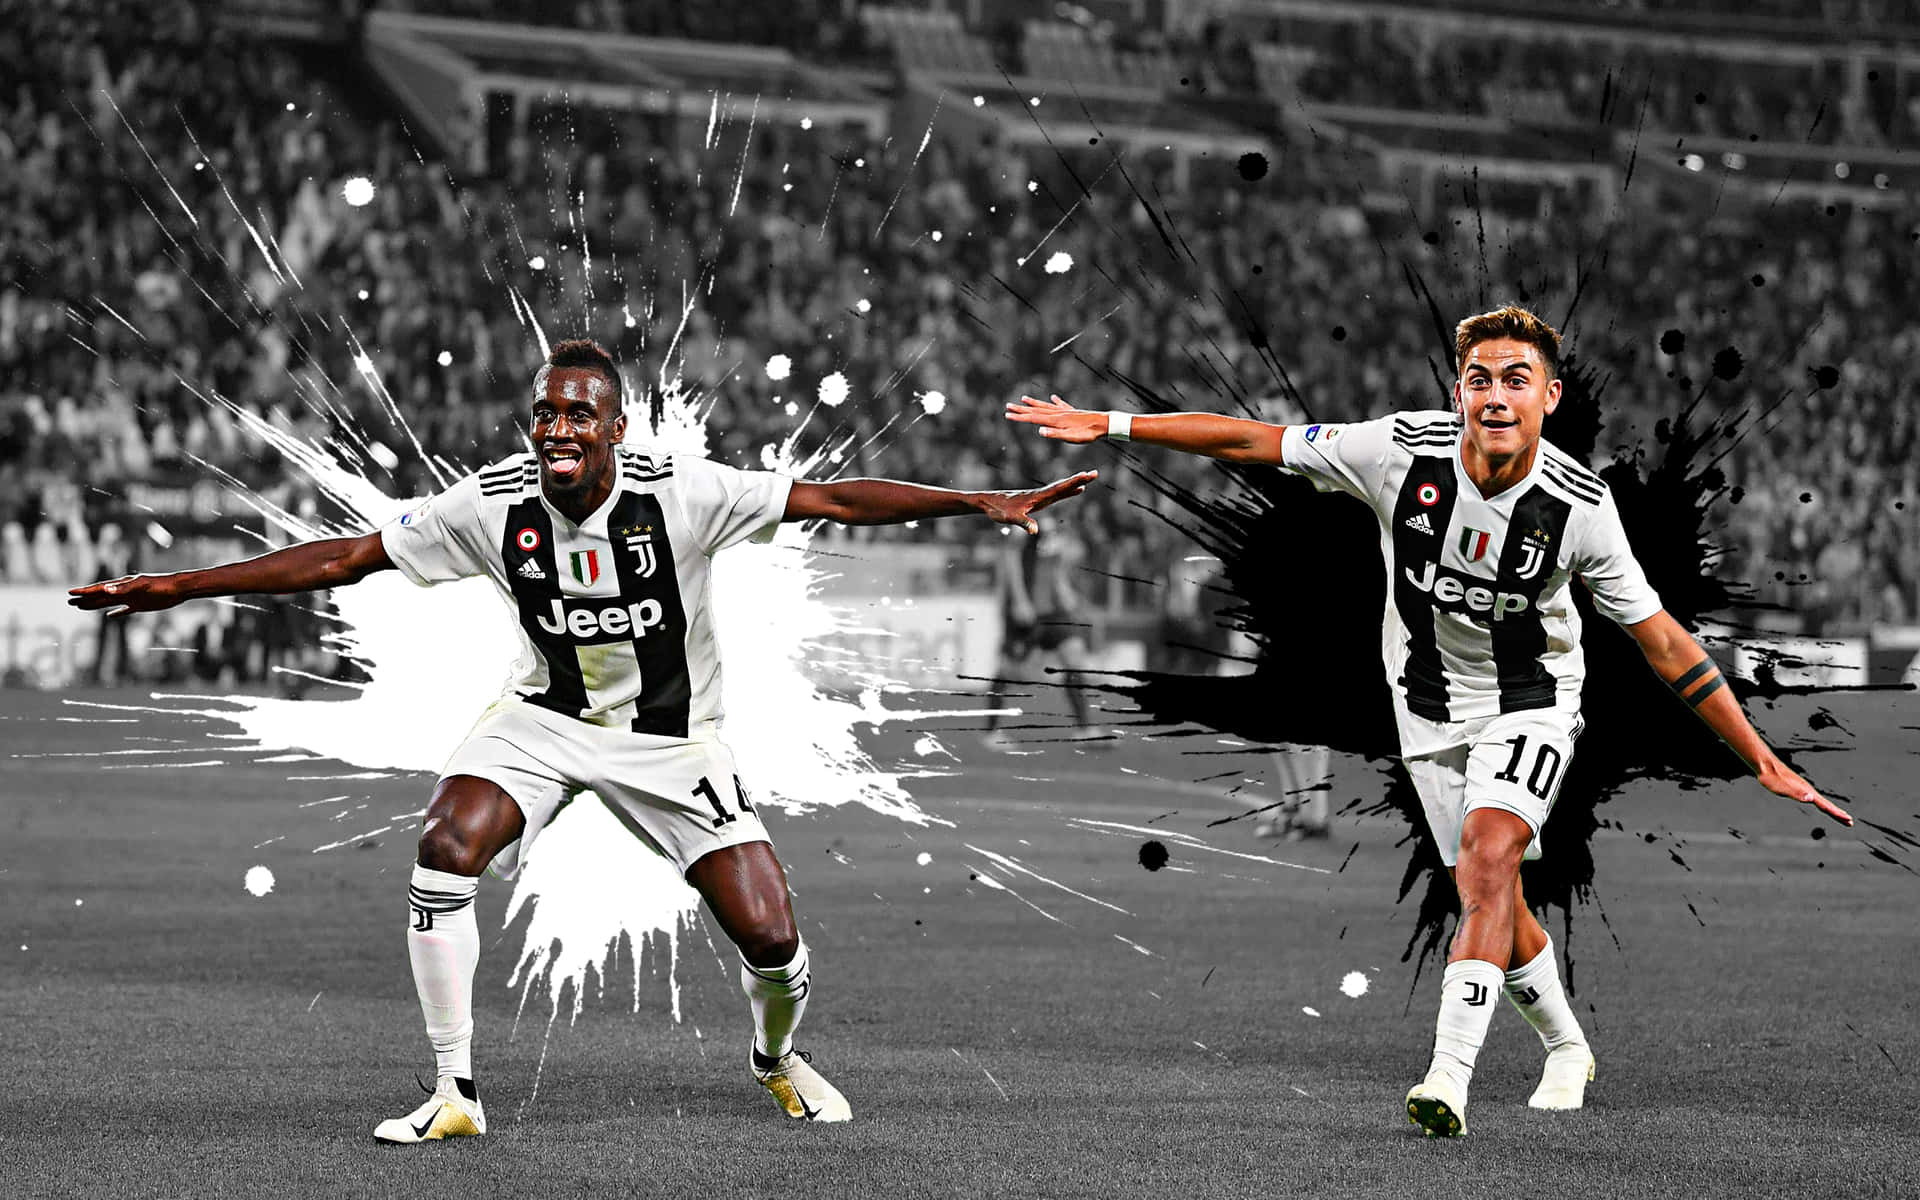 Blaisematuidi Und Paulo Dybala Von Juventus Wallpaper